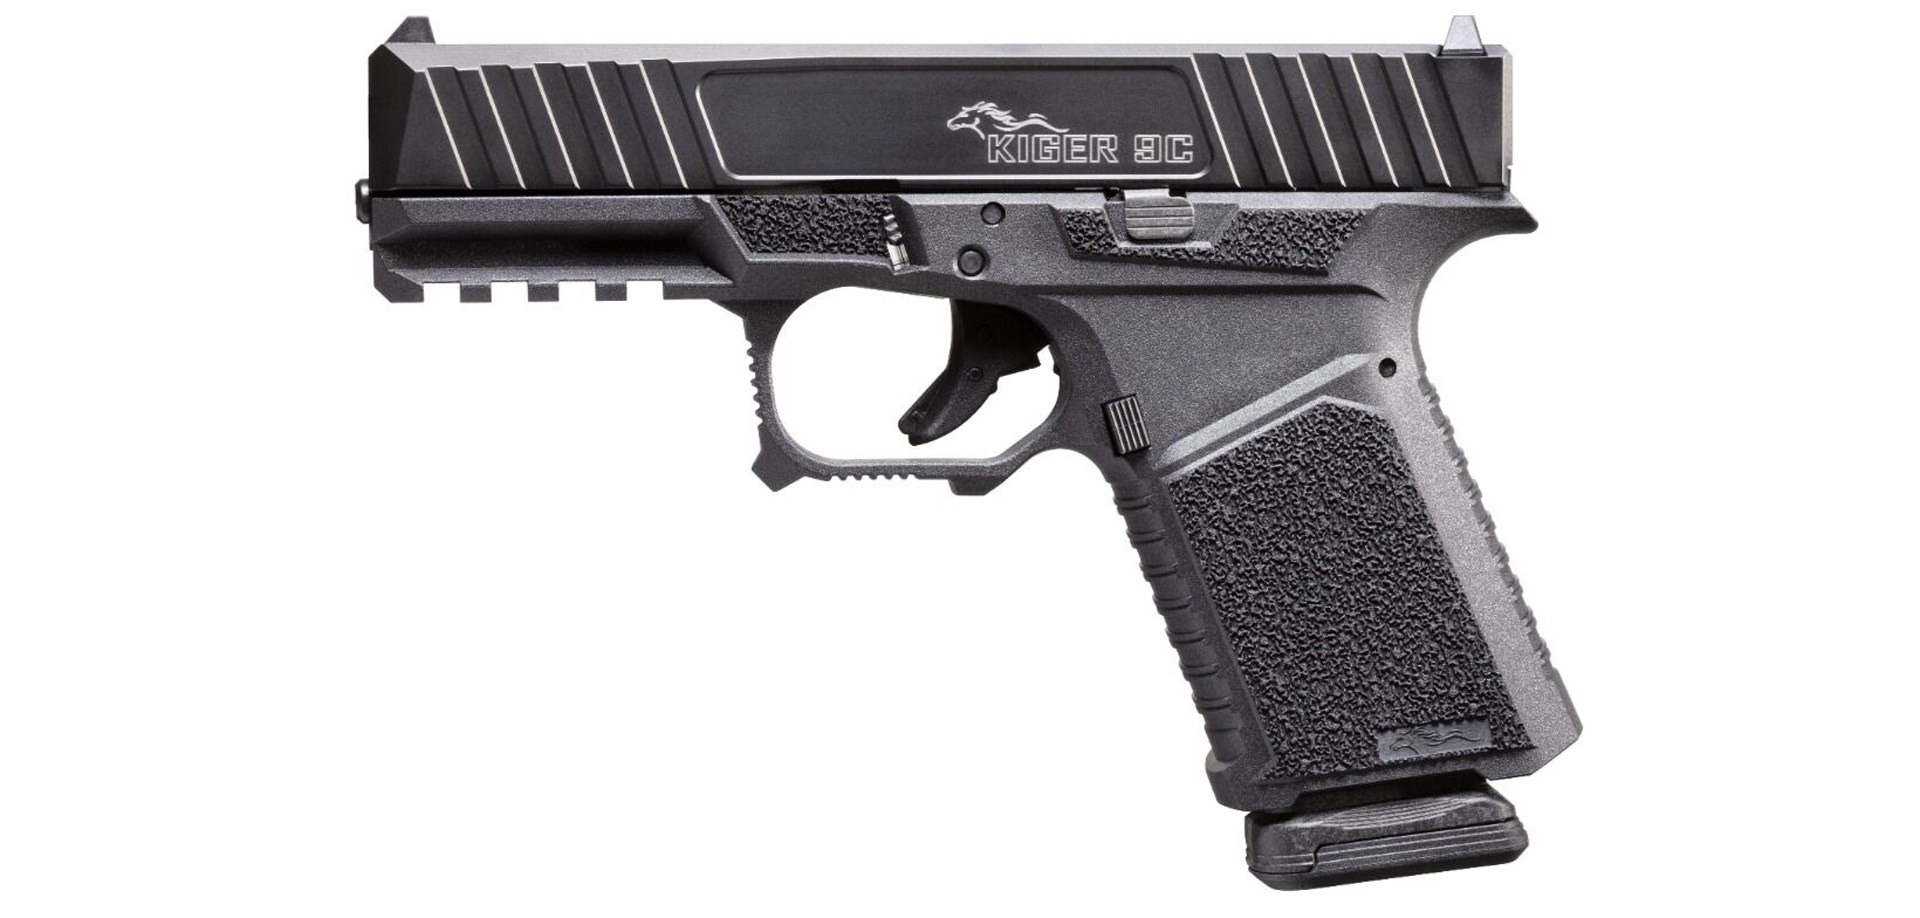 Kiger 9c pistol black handgun left-side view 9mm whte background